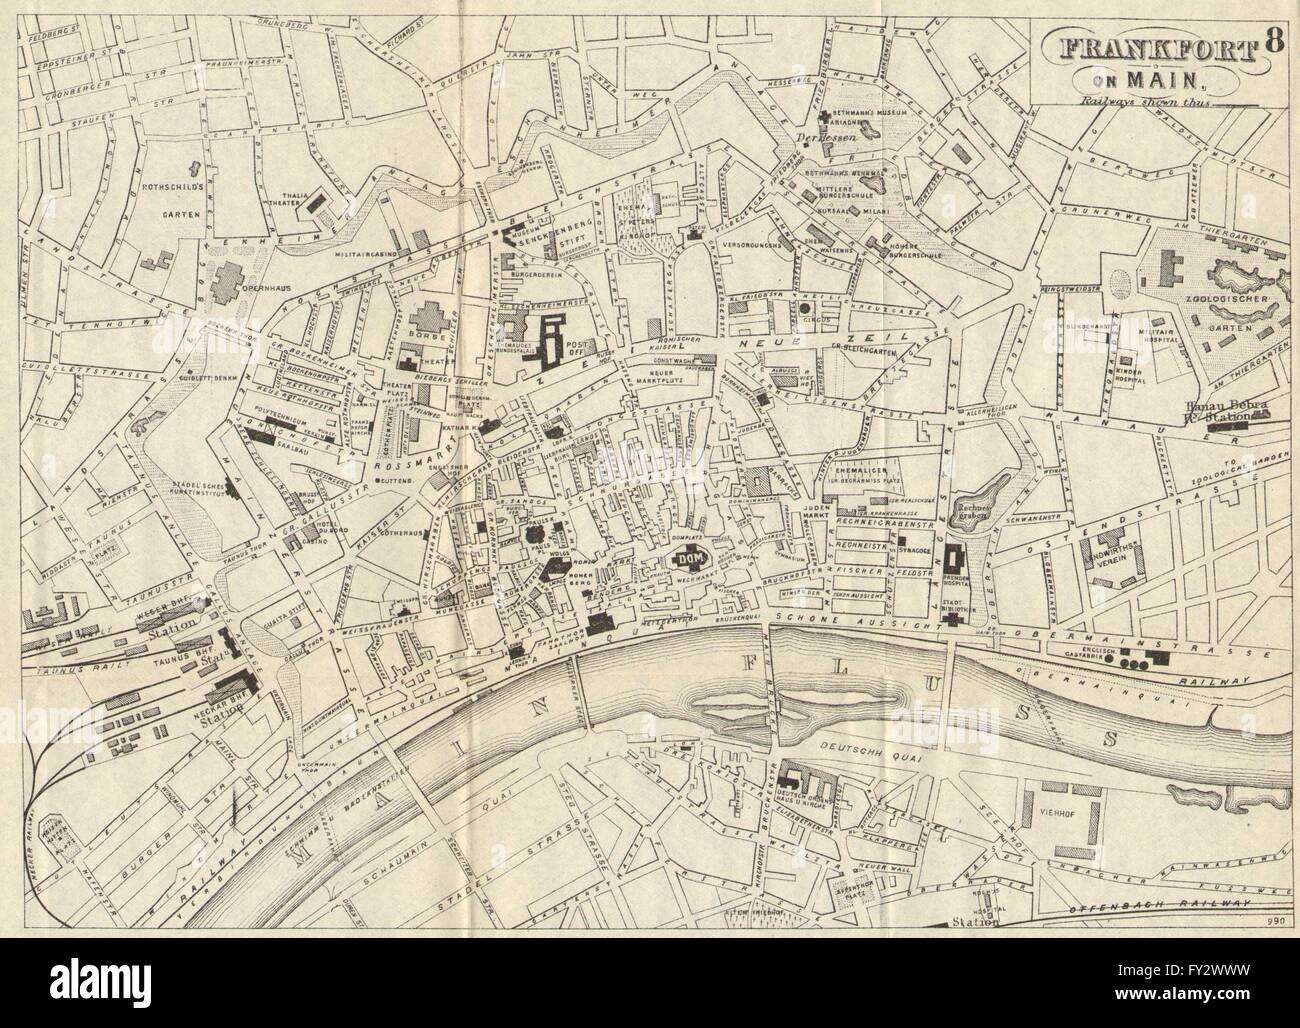 FRANKFURT AM MAIN: Antique town plan. City map. Germany. BRADSHAW, 1890 Stock Photo